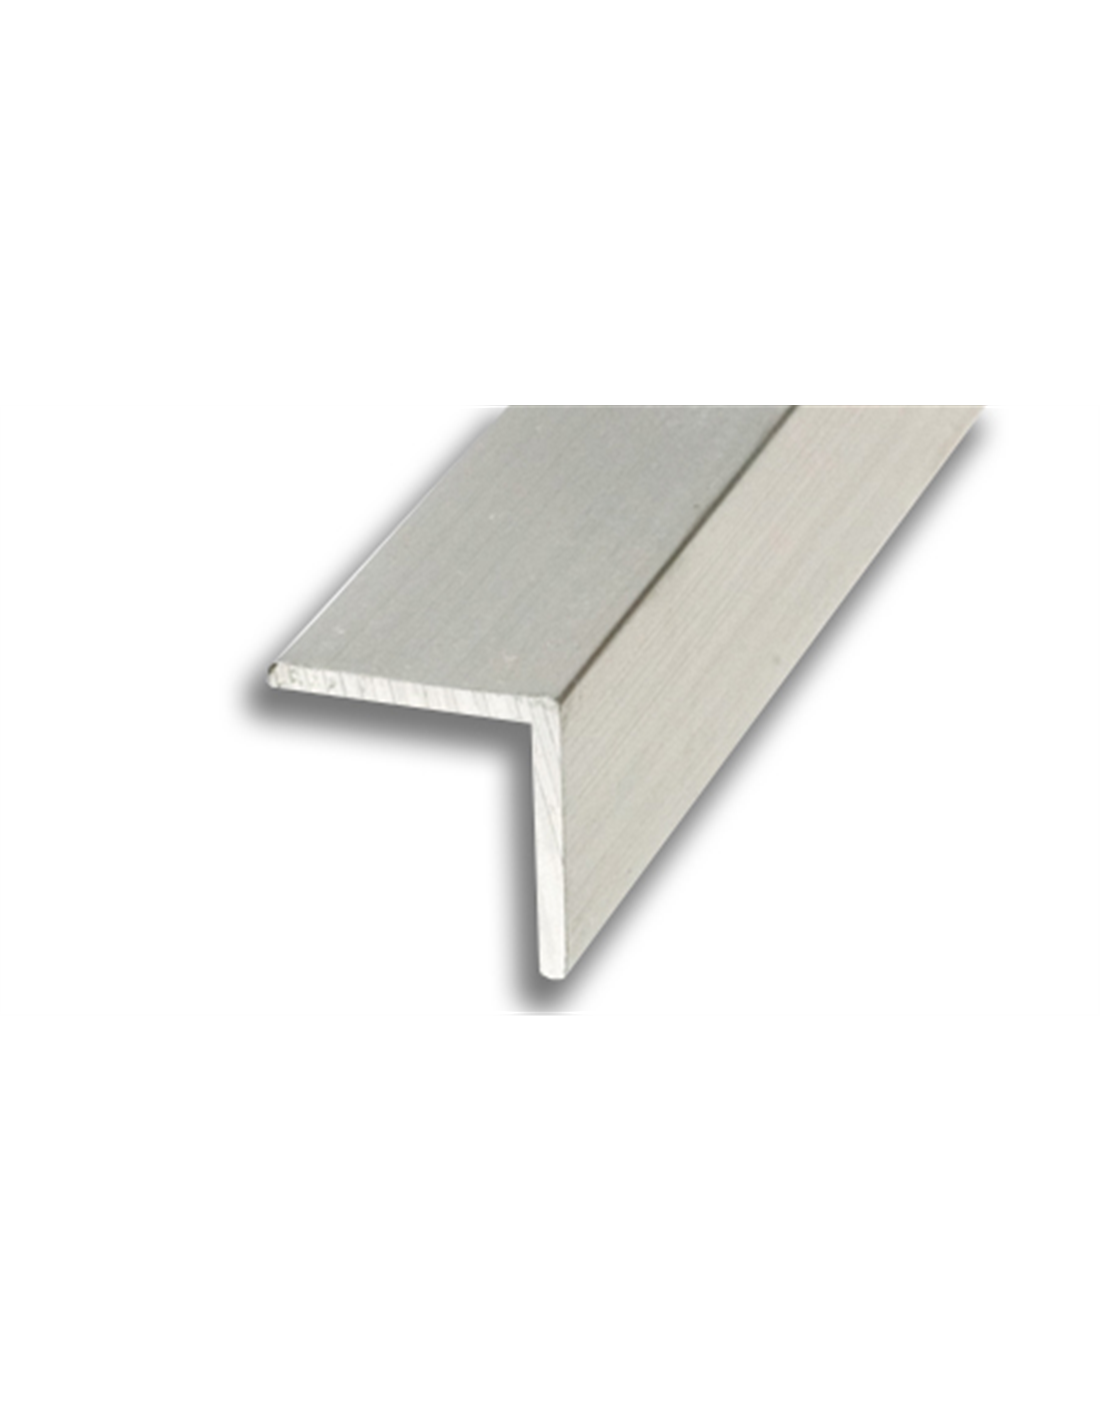 Perfil De Aluminio Angulo 15×15 Mm BLANCO 6 Metros – Alumas